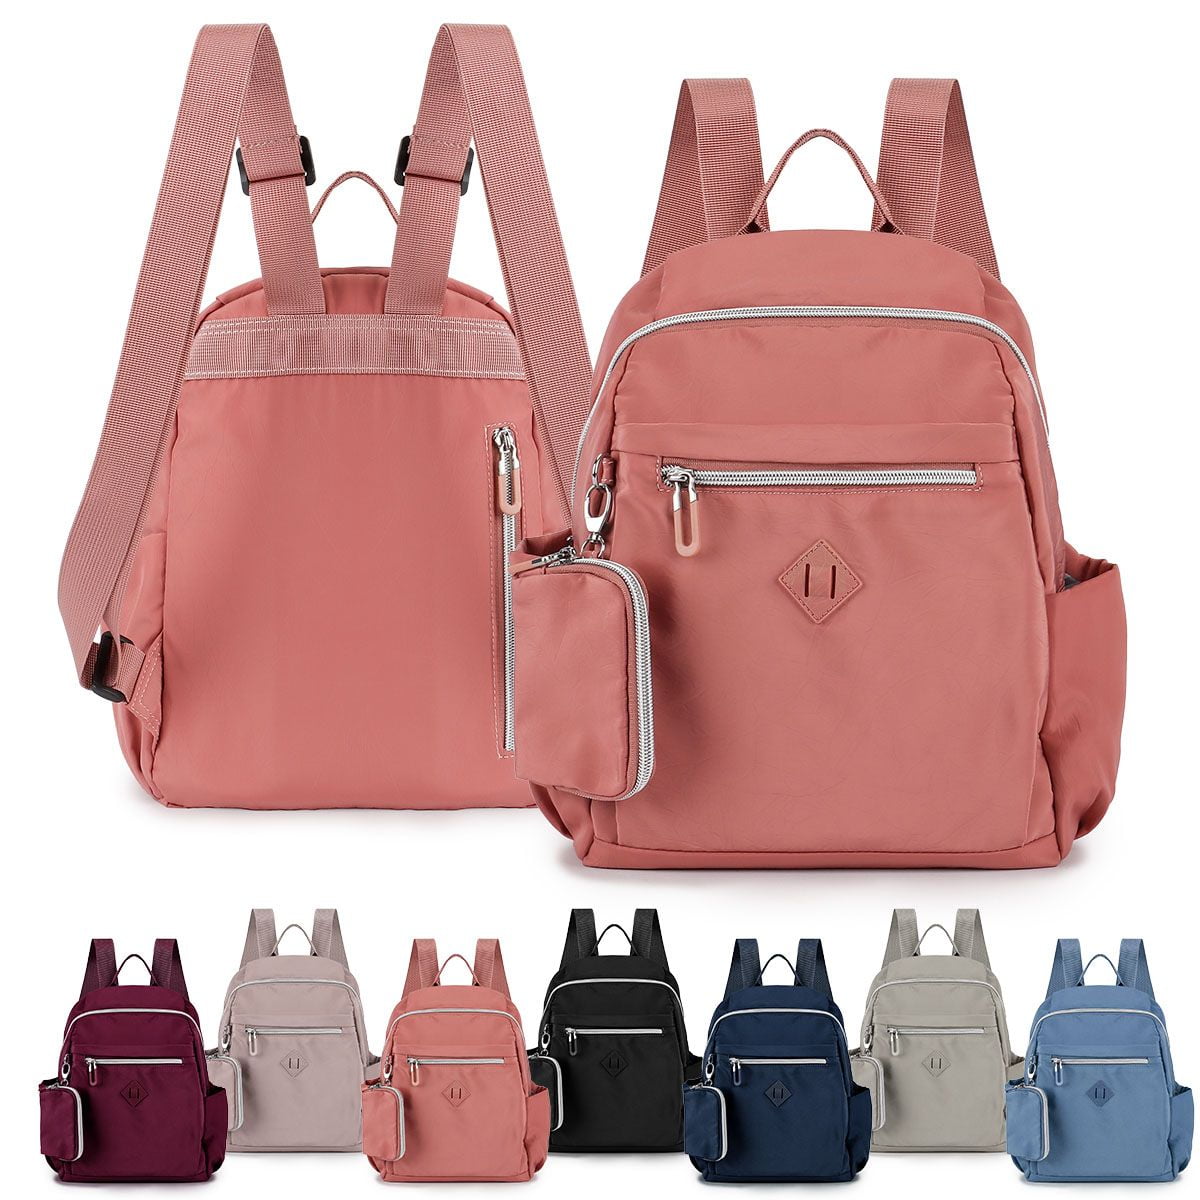 Anello Mini Backpack, Women's Fashion, Bags & Wallets, Backpacks